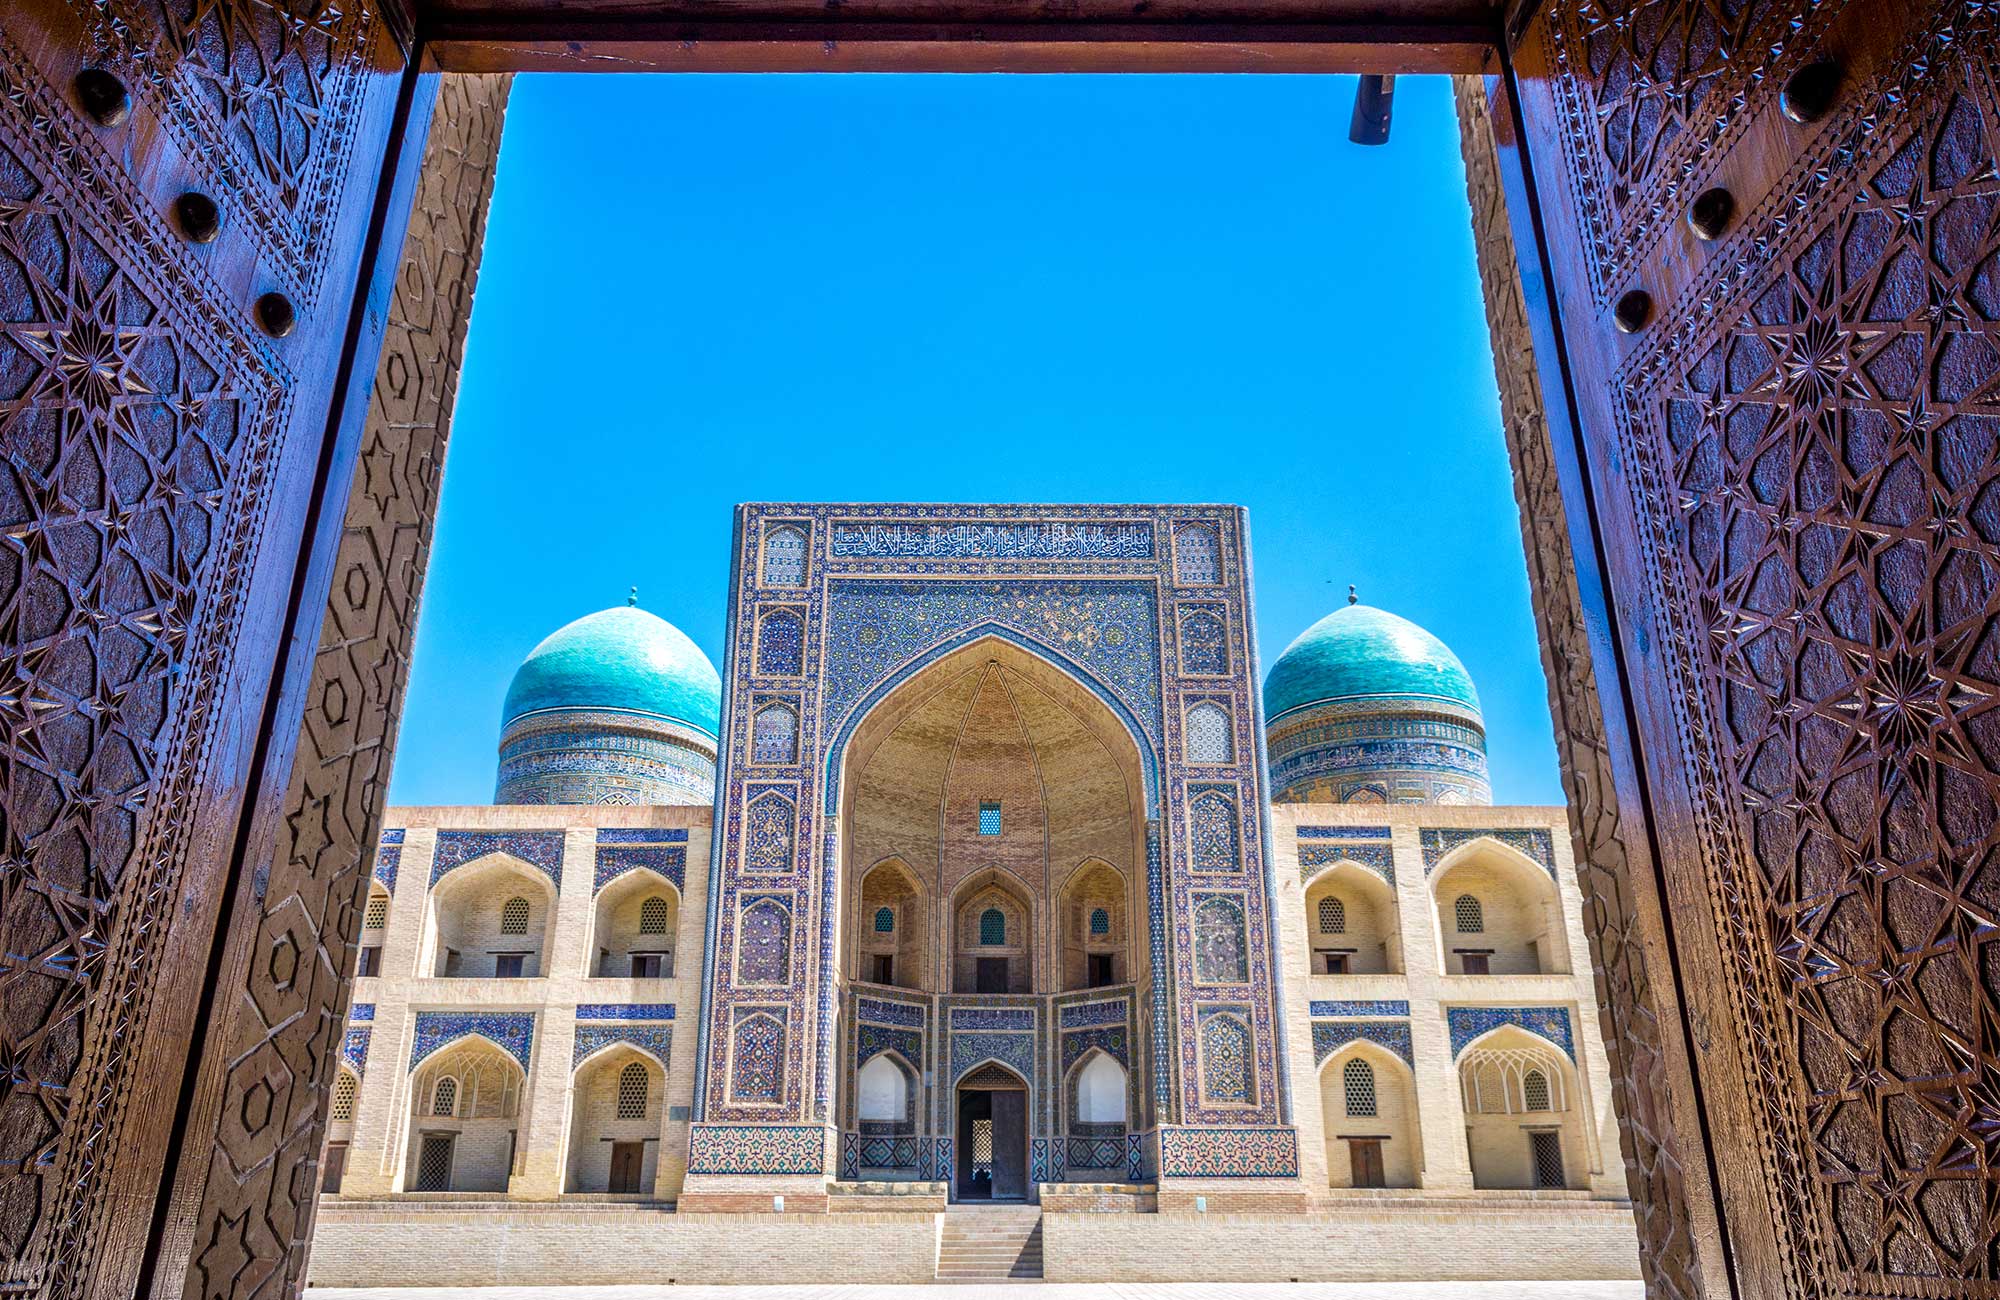 vacker arkitektur i bukhara i uzbekistan, centralasien